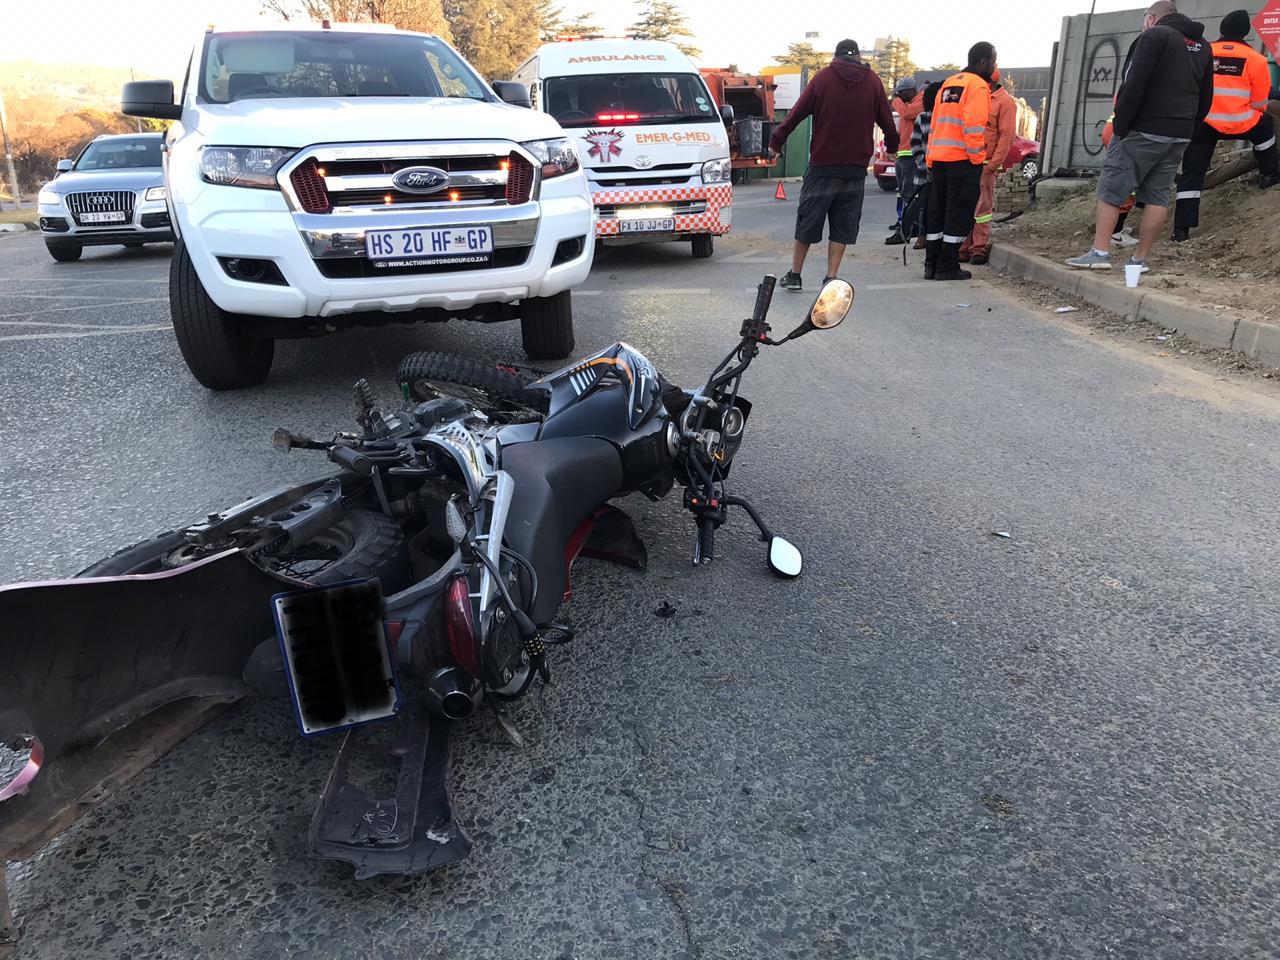 Motorycle collision leaves one injured in Randburg